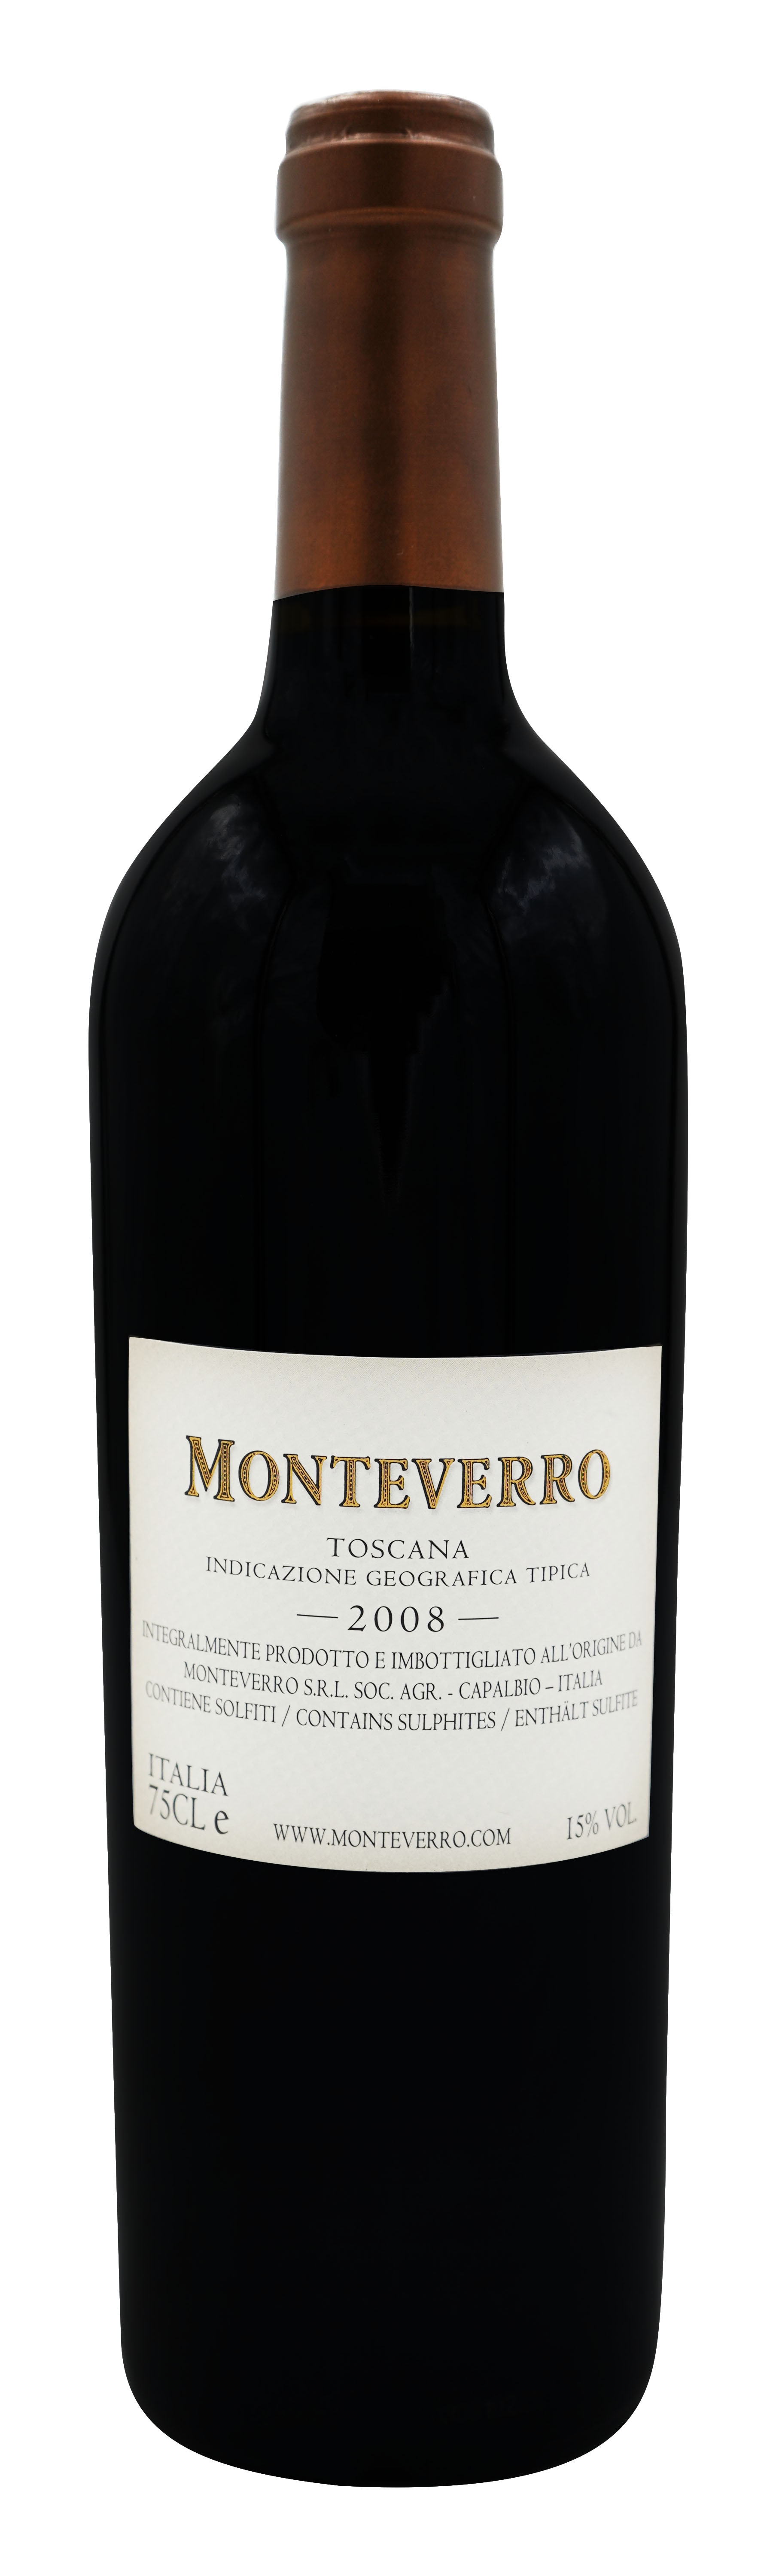 Monteverro 2008 - back label